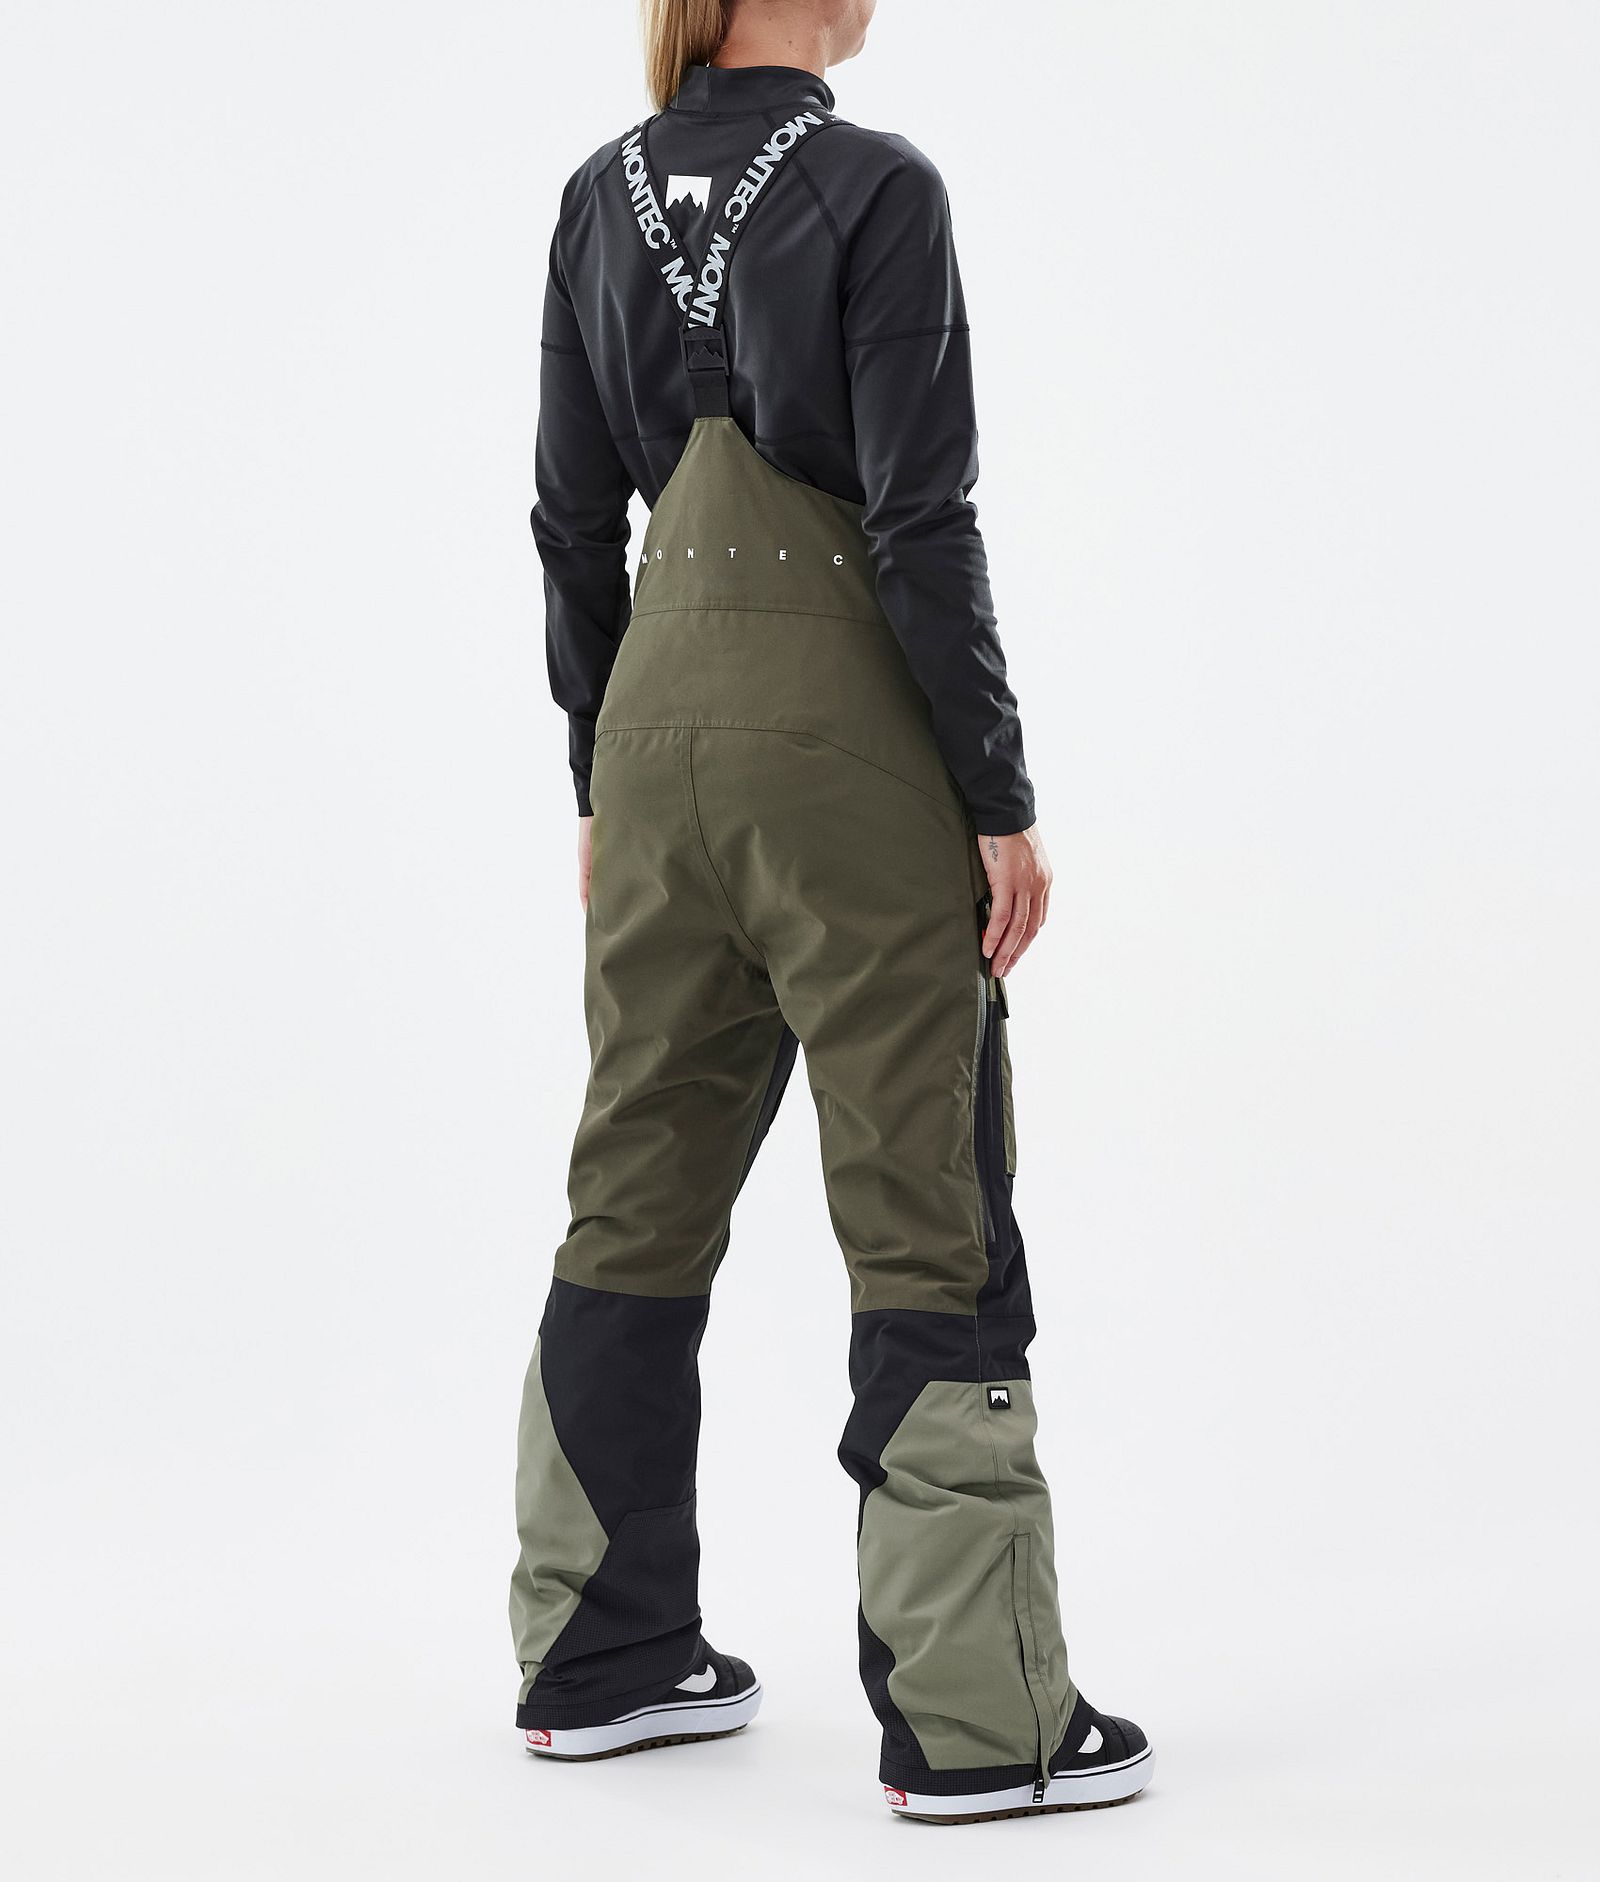 Fawk W Pantalon de Snowboard Femme Olive Green/Black/Greenish